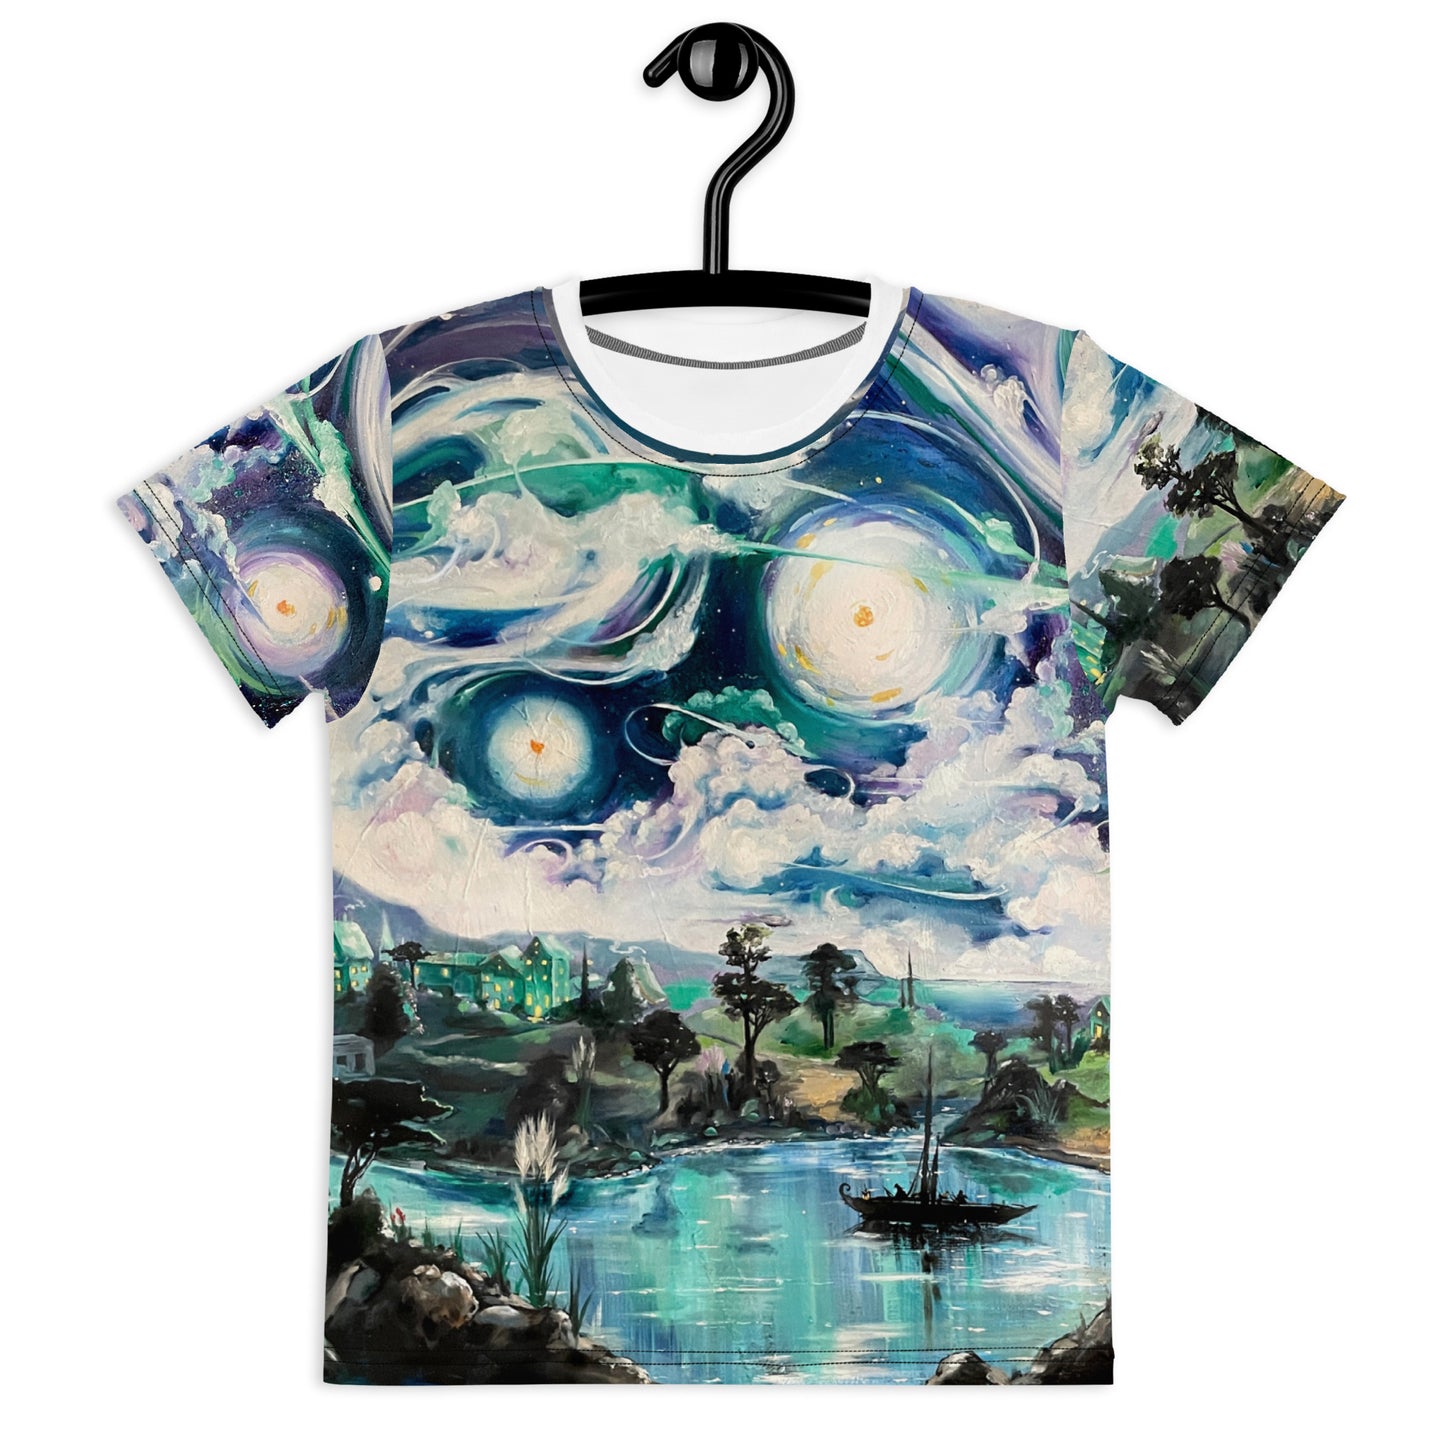 Starry Lagoon Kids crew neck t-shirt